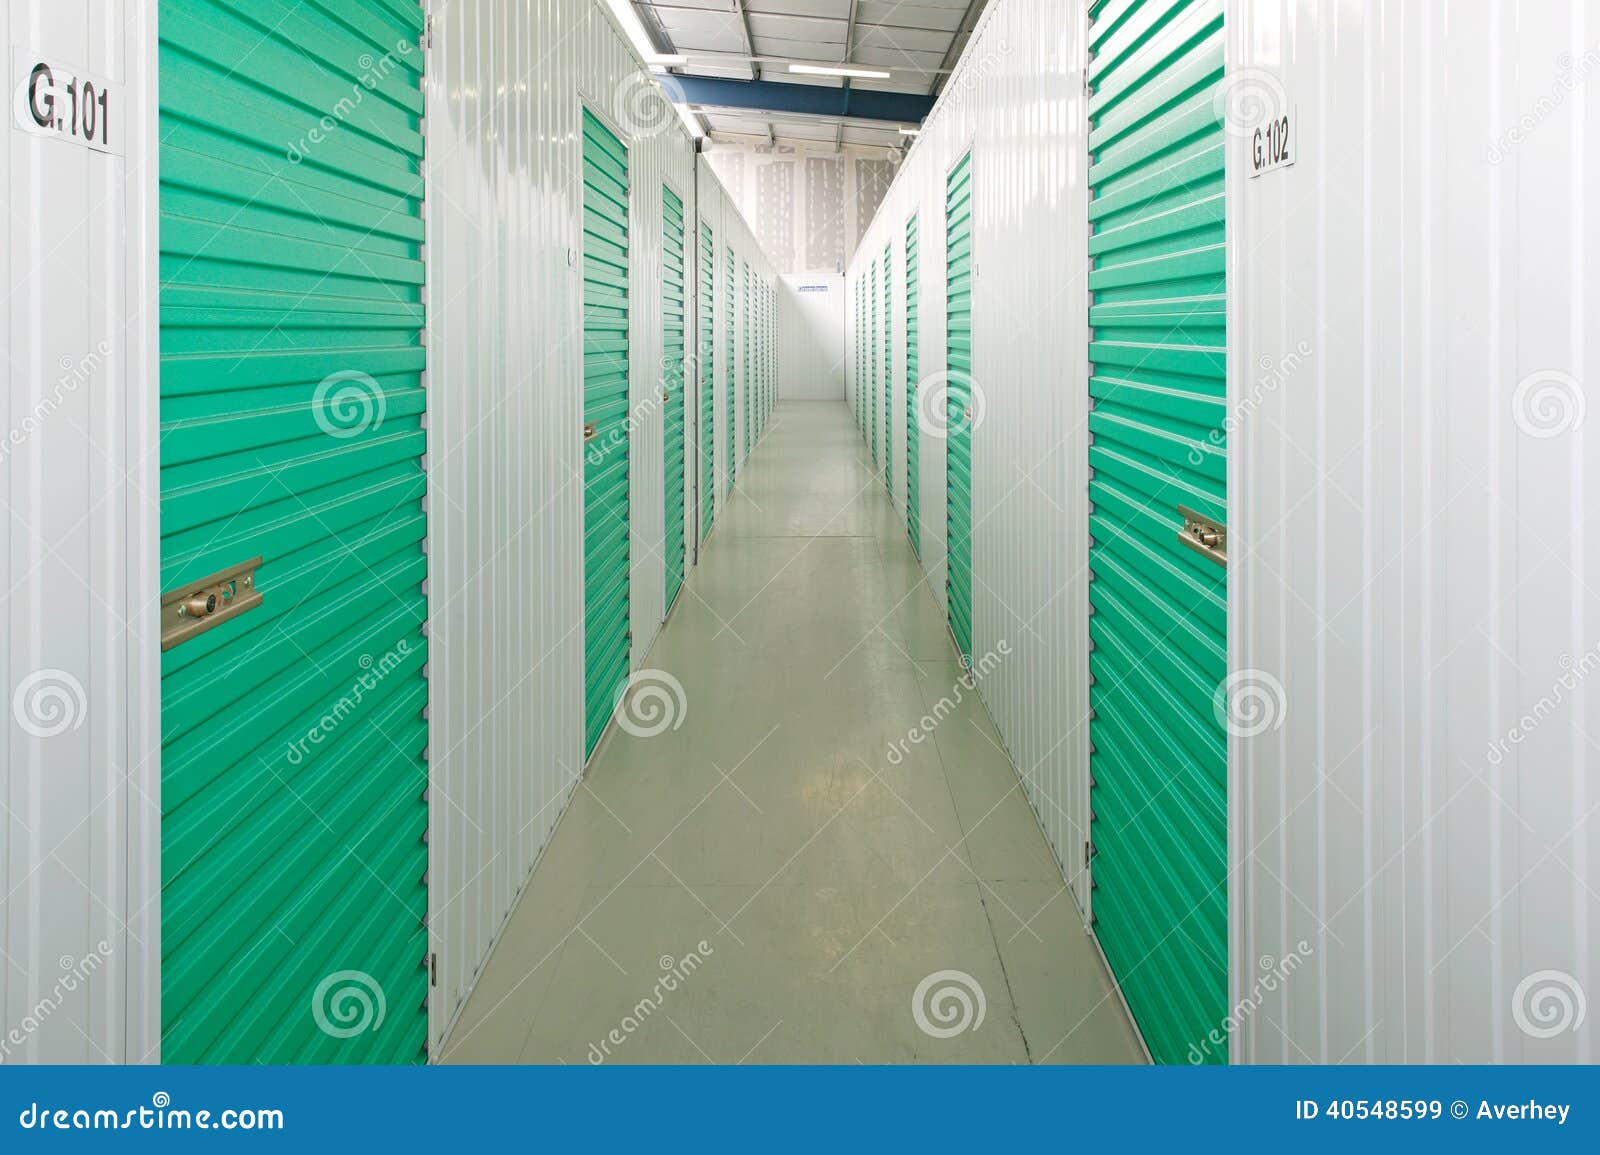 self storage units